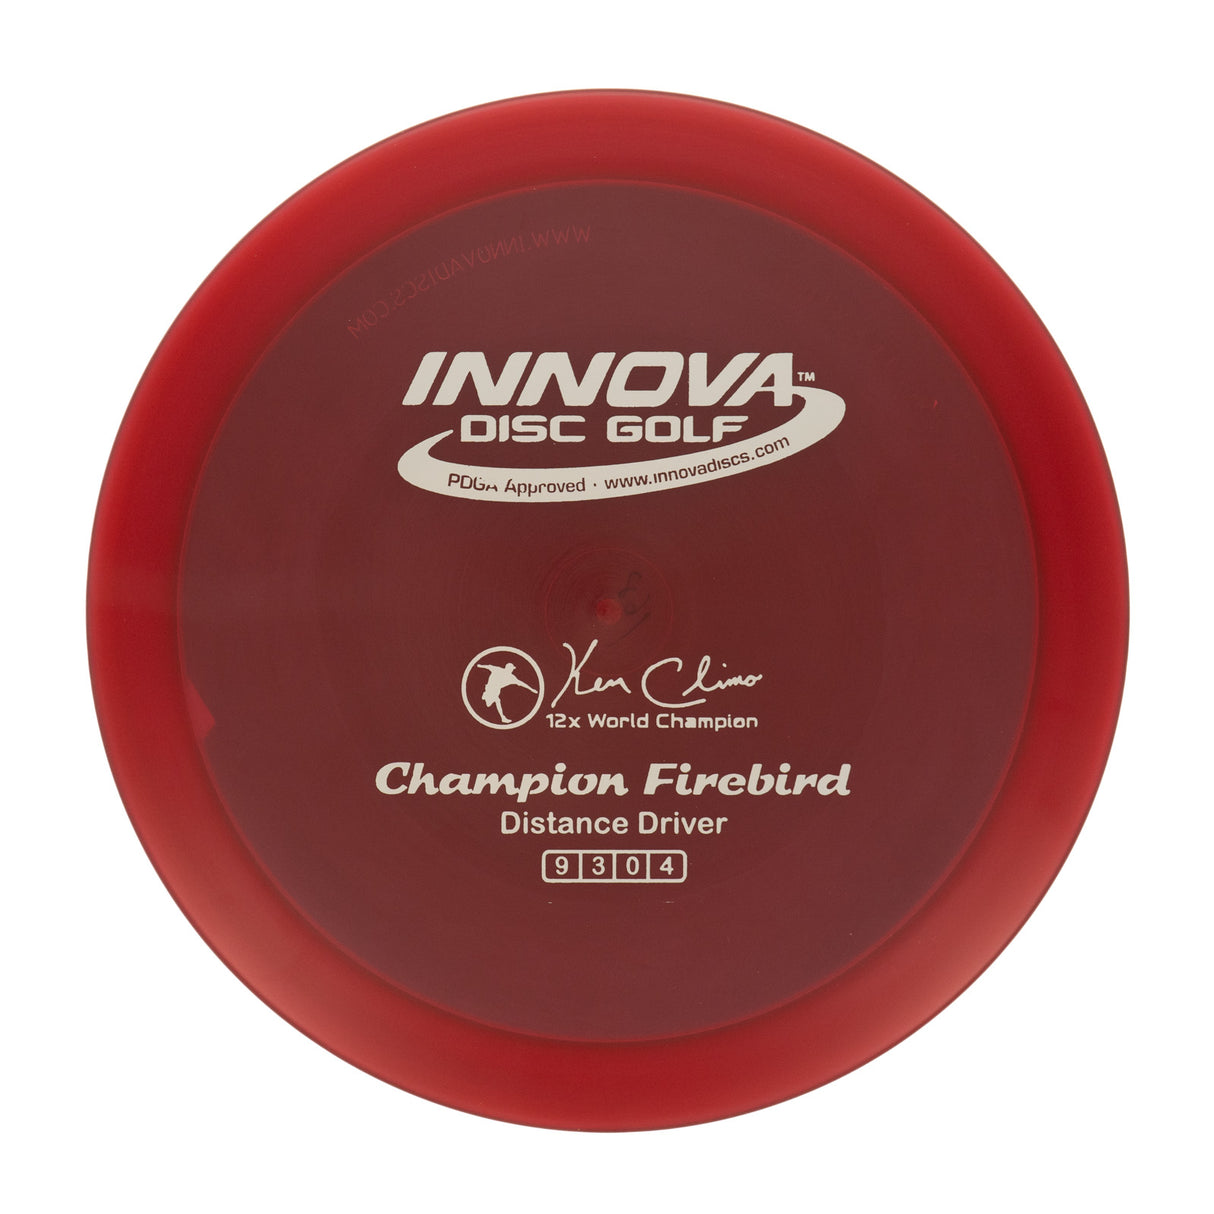 Innova Firebird - Ken Climo Champion 169g | Style 0002